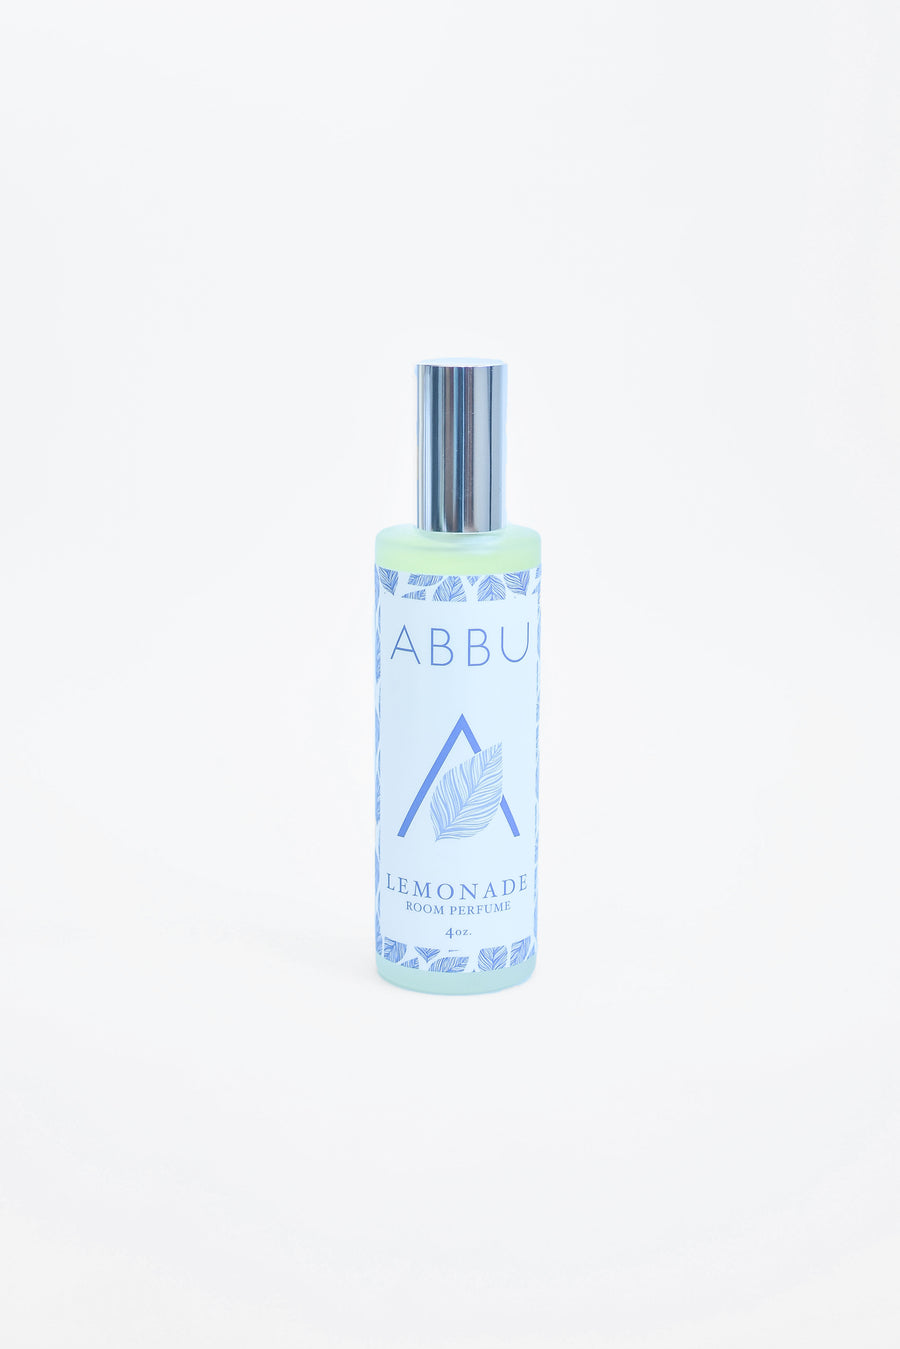 Abbu Room Perfume Lemonade, 8 OZ